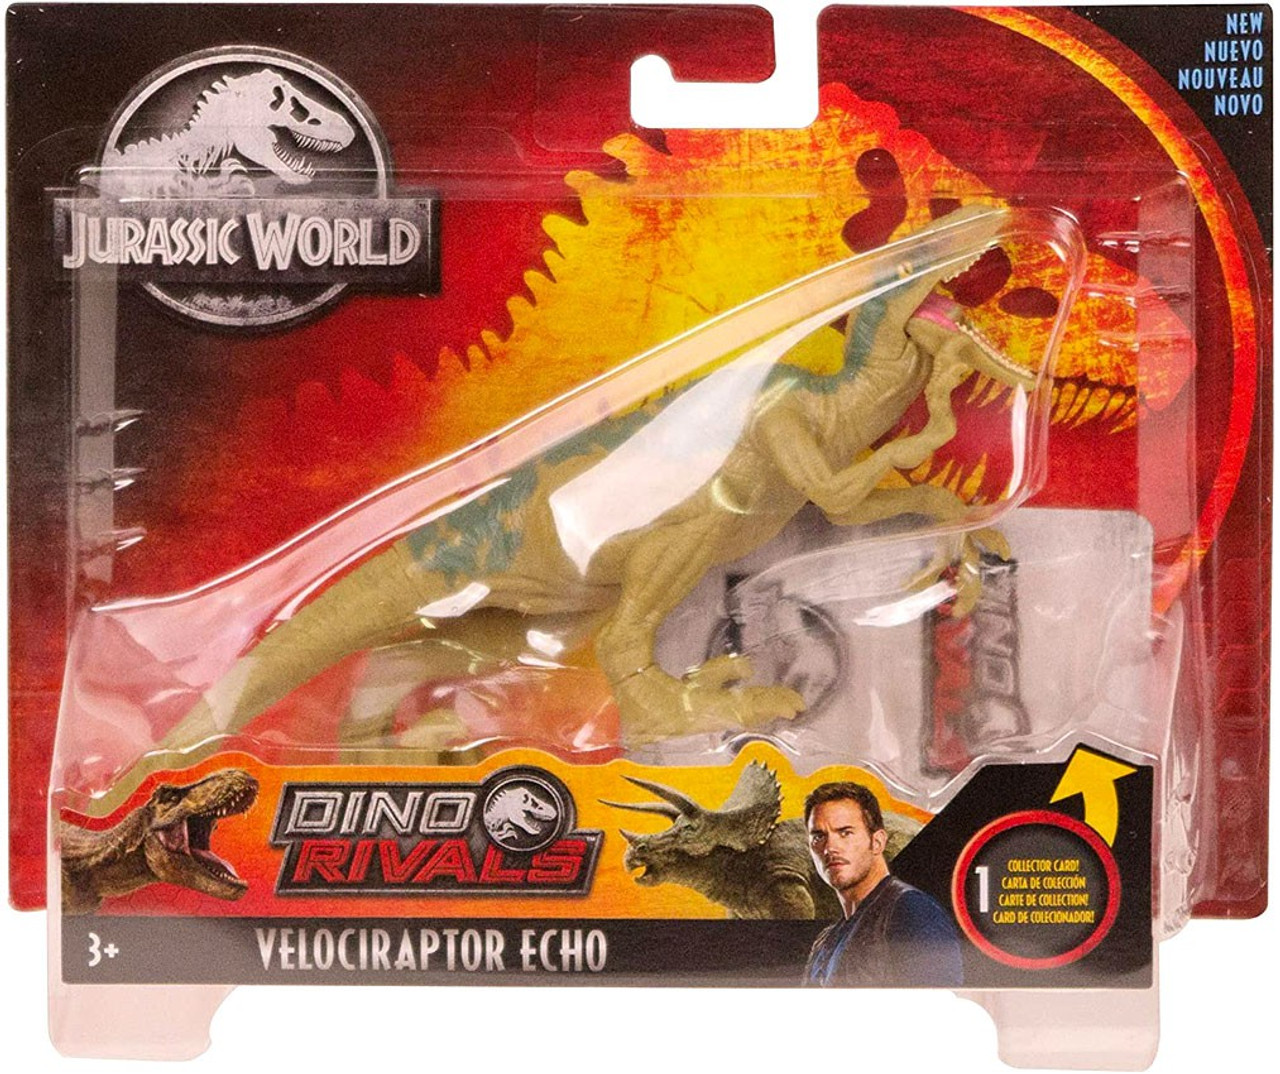 Jurassic World Dino Rivals Velociraptor Echo 2018 Mattel Gfg60 Collector Card for sale online